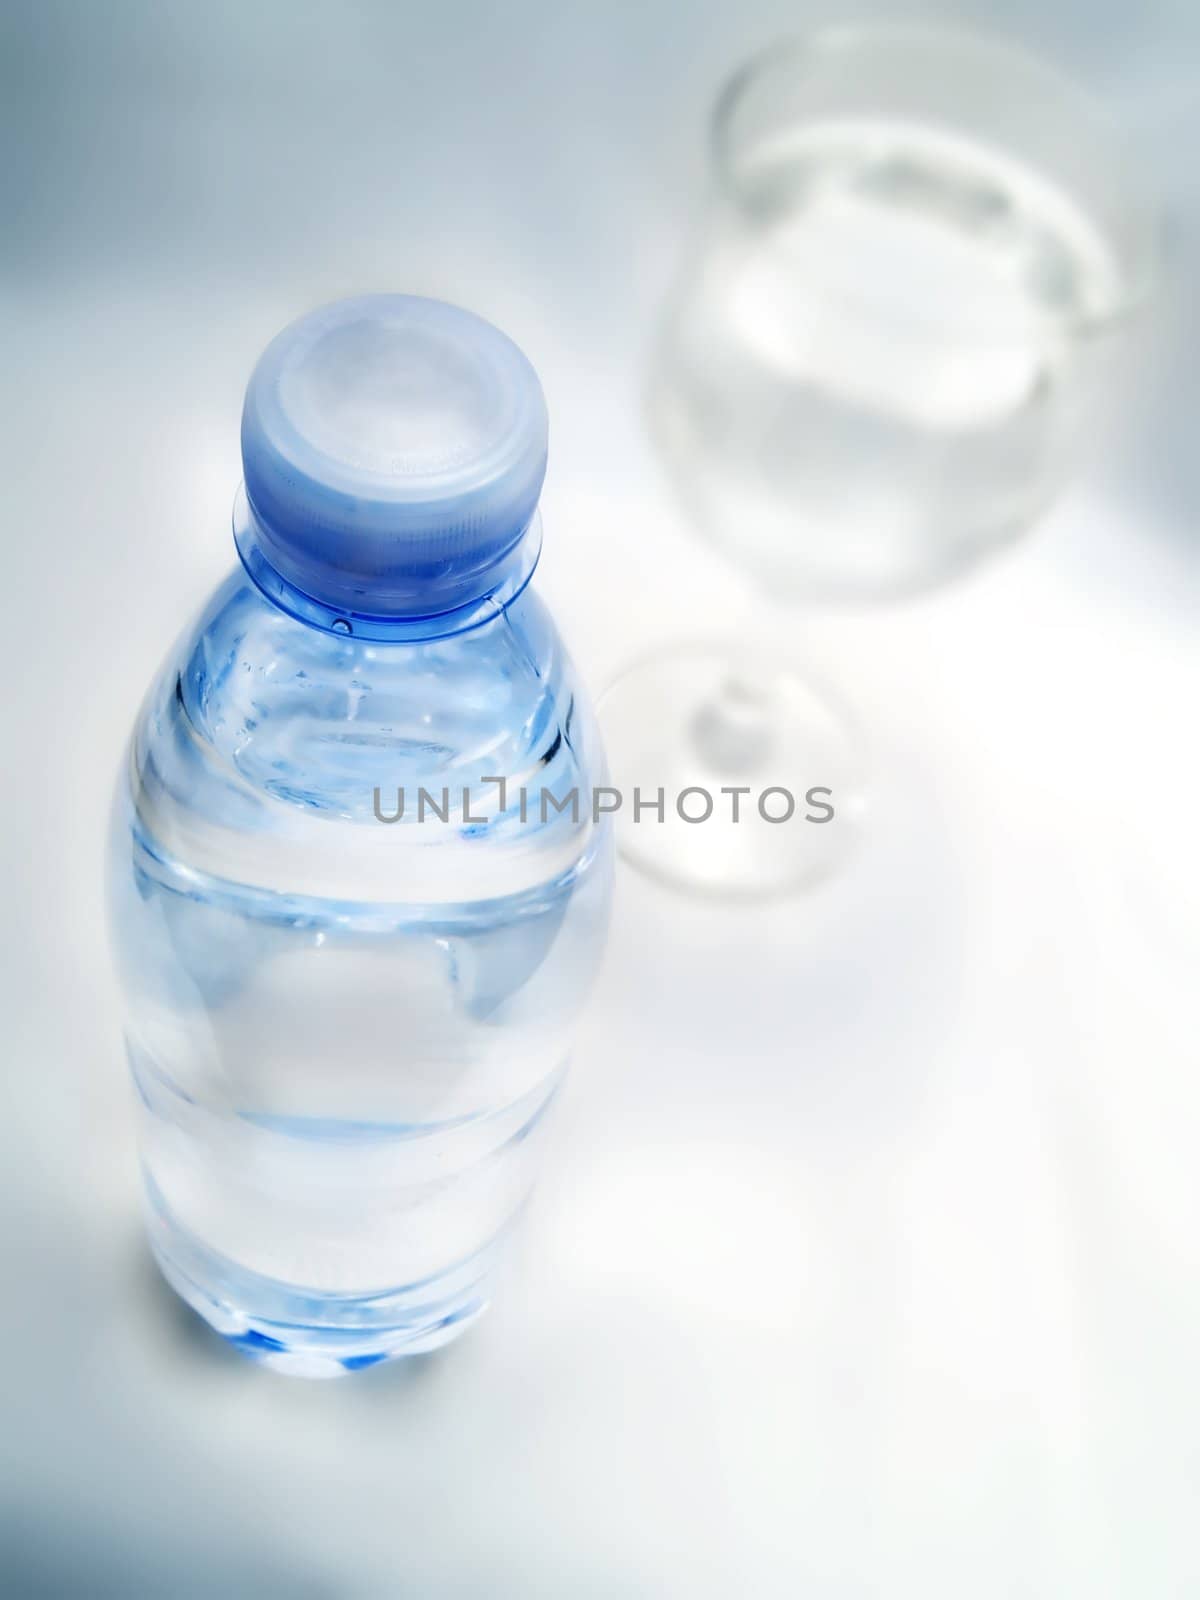 Bottle of water by henrischmit